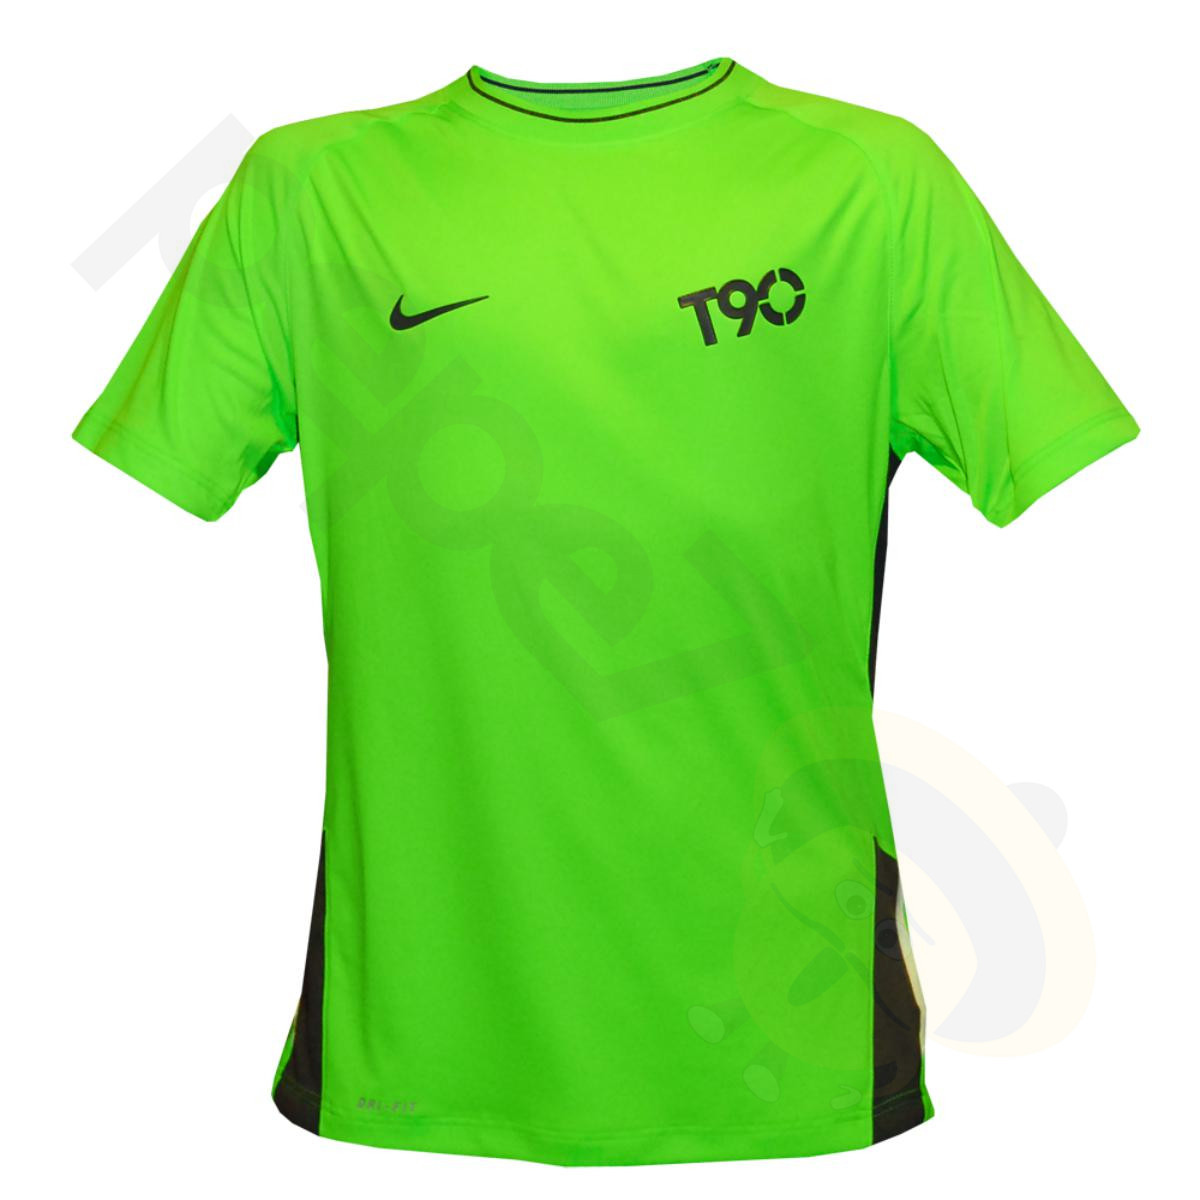 Cuaderno Gallo lluvia Goalkeeper Jersey Nike T90 SS TOP 2 | pepe7.com